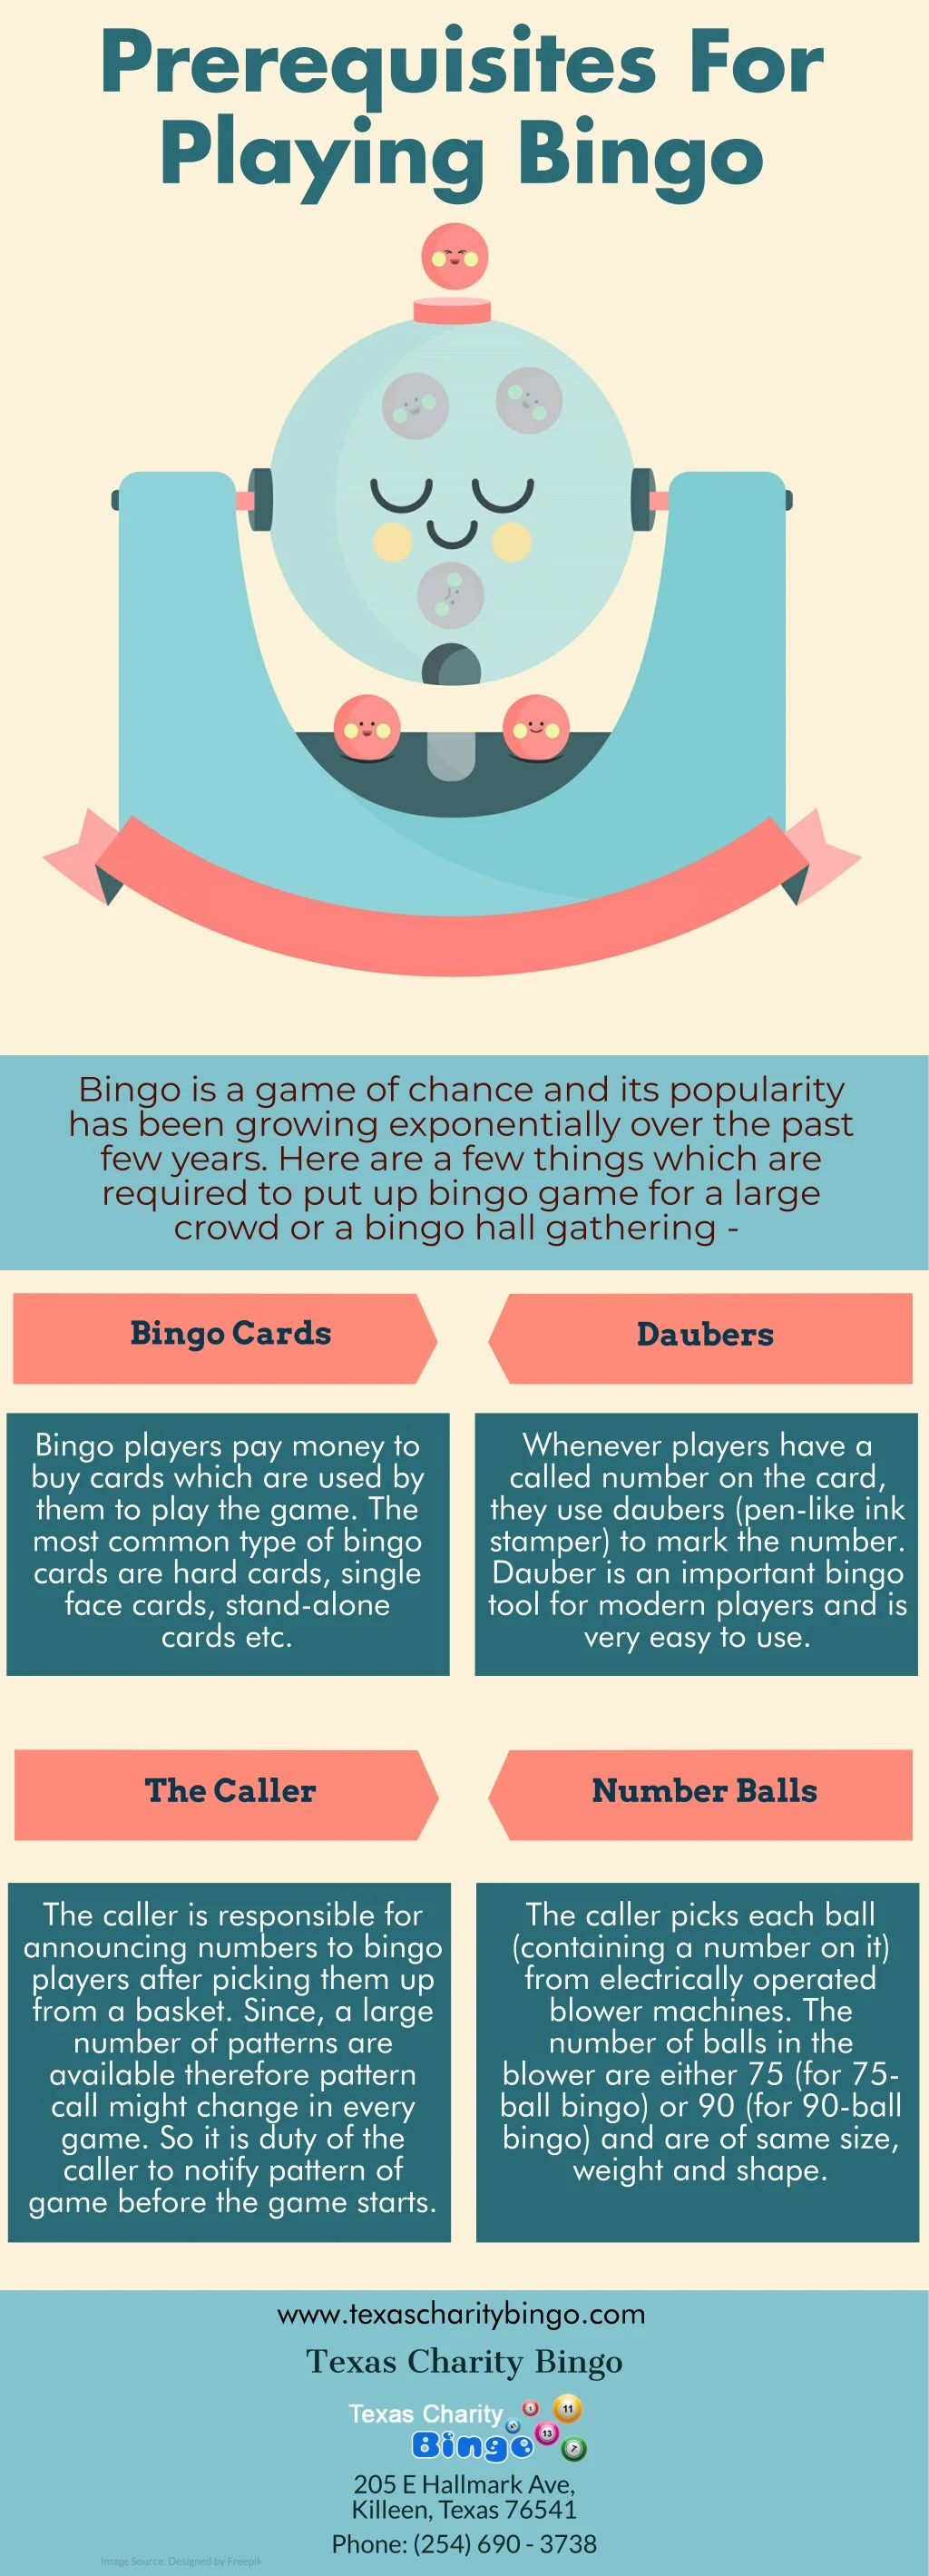 prerequisites for playing bingo